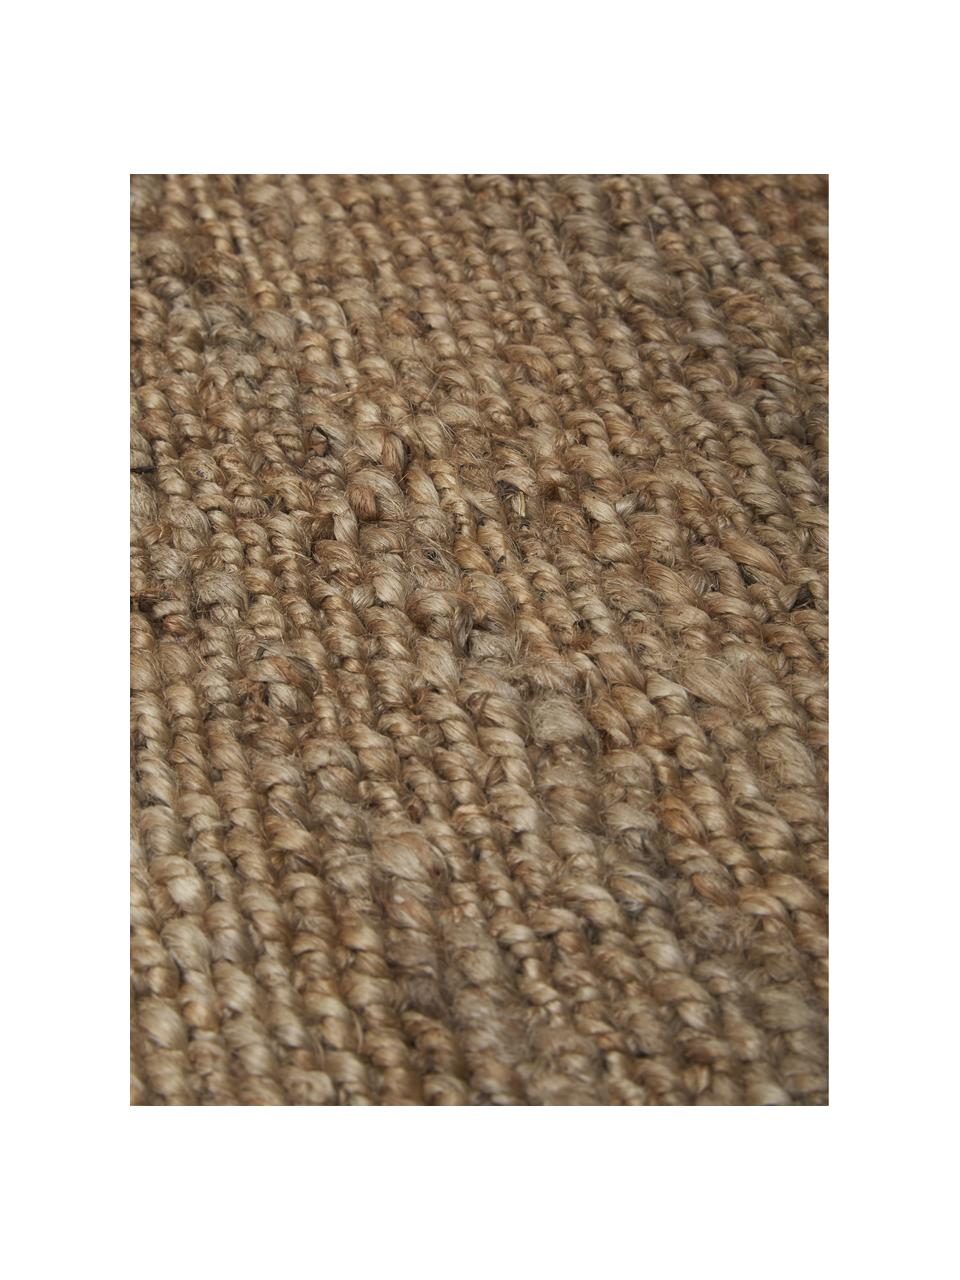 Tappeto in corda da corridoio/ ingressi color beige e marrone,lavabile a mano Maison Textiles Tapis Tapis d'extérieur 